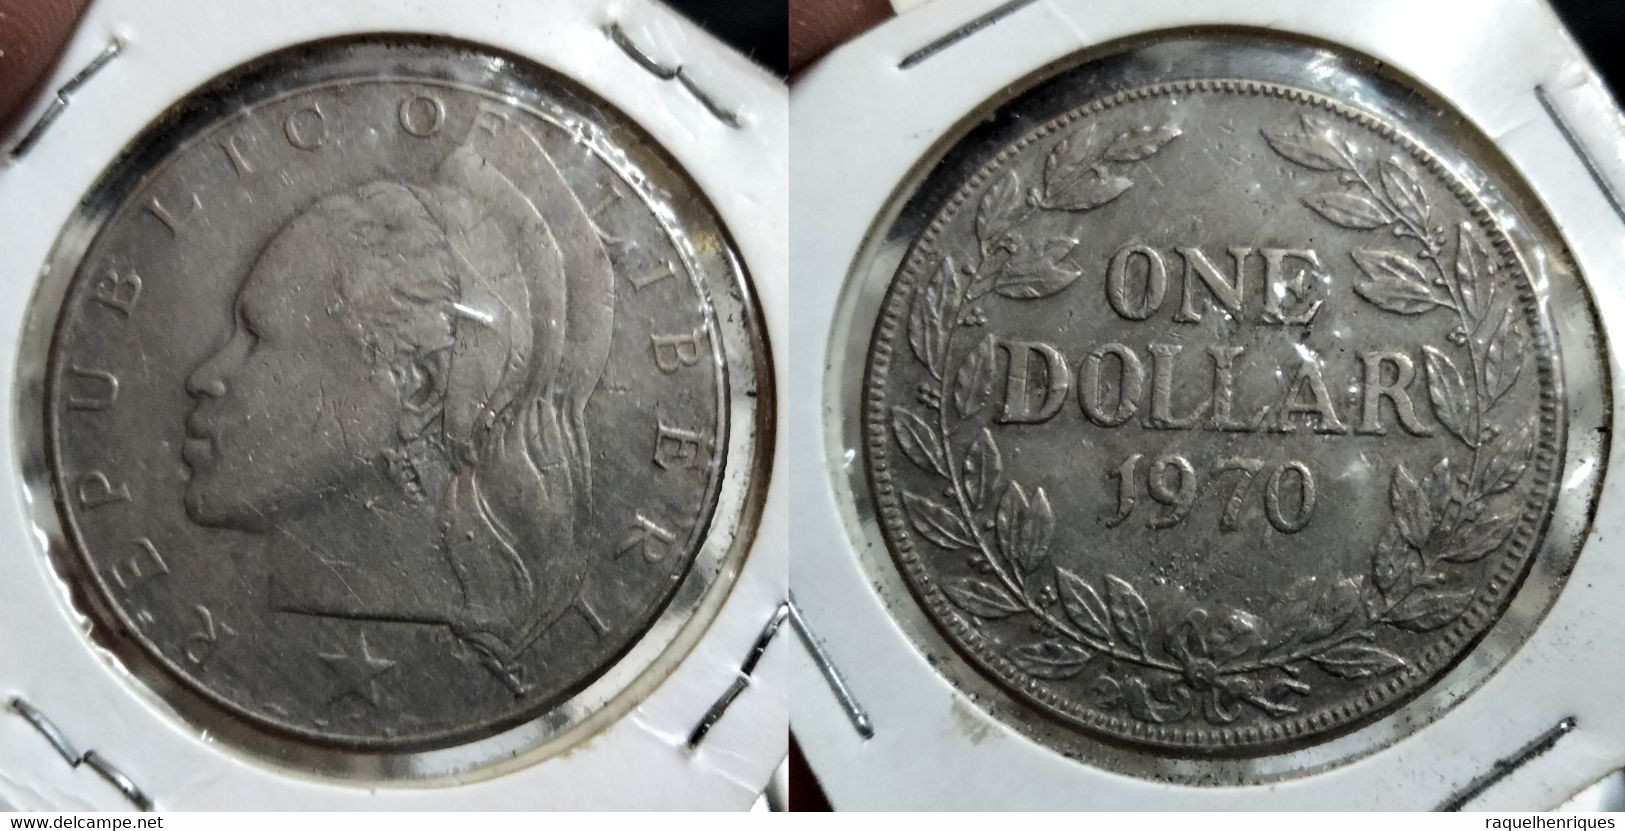 LIBERIA ONE DOLLAR 1970 Km# 18a.2 (G#08-29) - Liberia